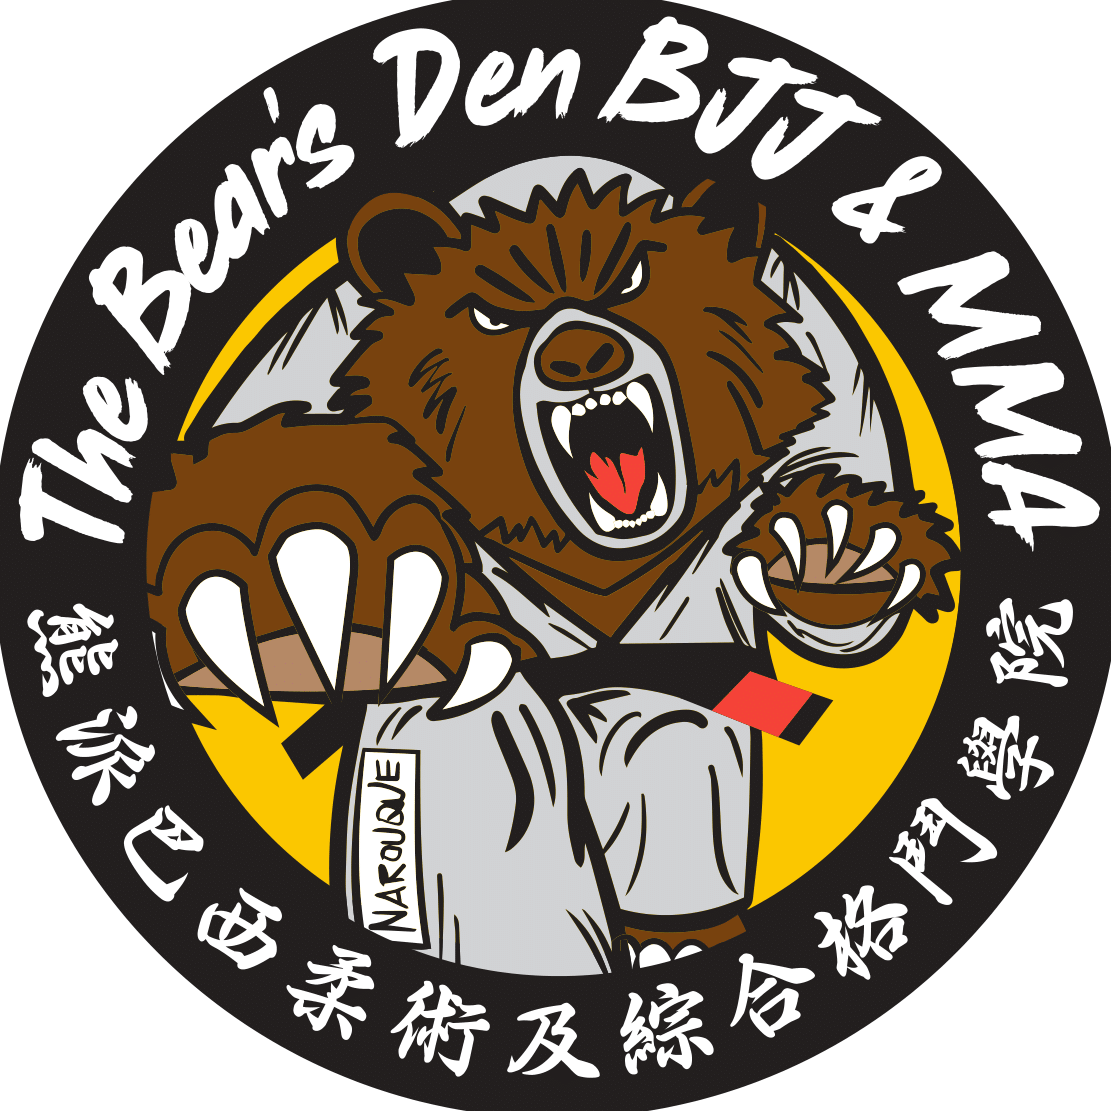 The Bear's Den BJJ & MMA 熊派巴西柔術及綜合格鬥學院